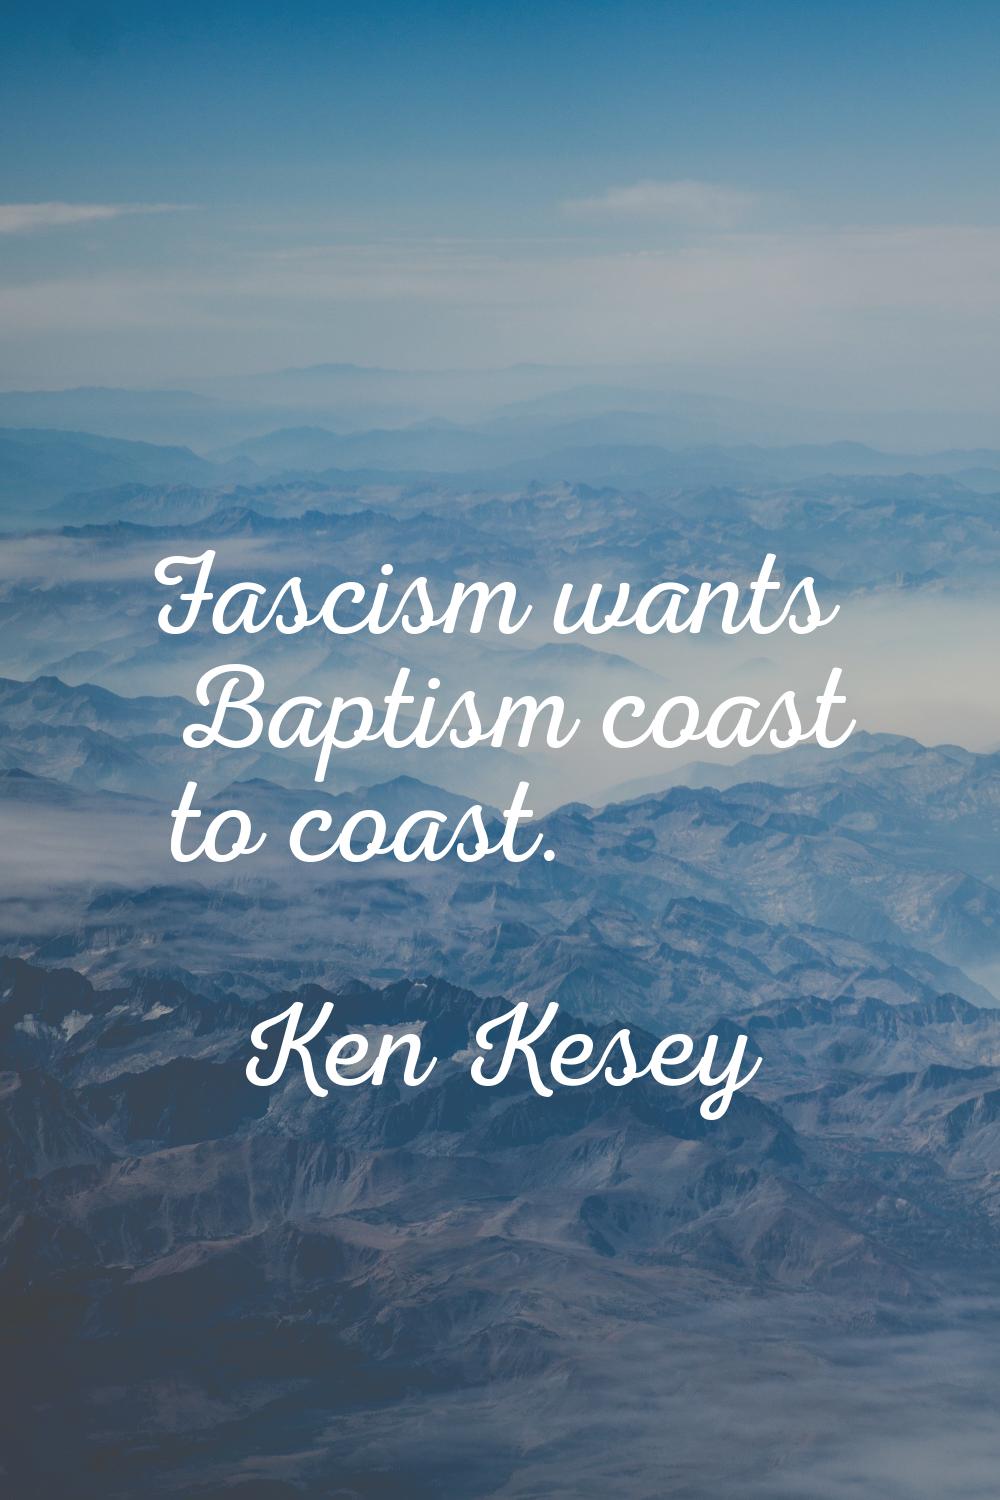 Fascism wants Baptism coast to coast.